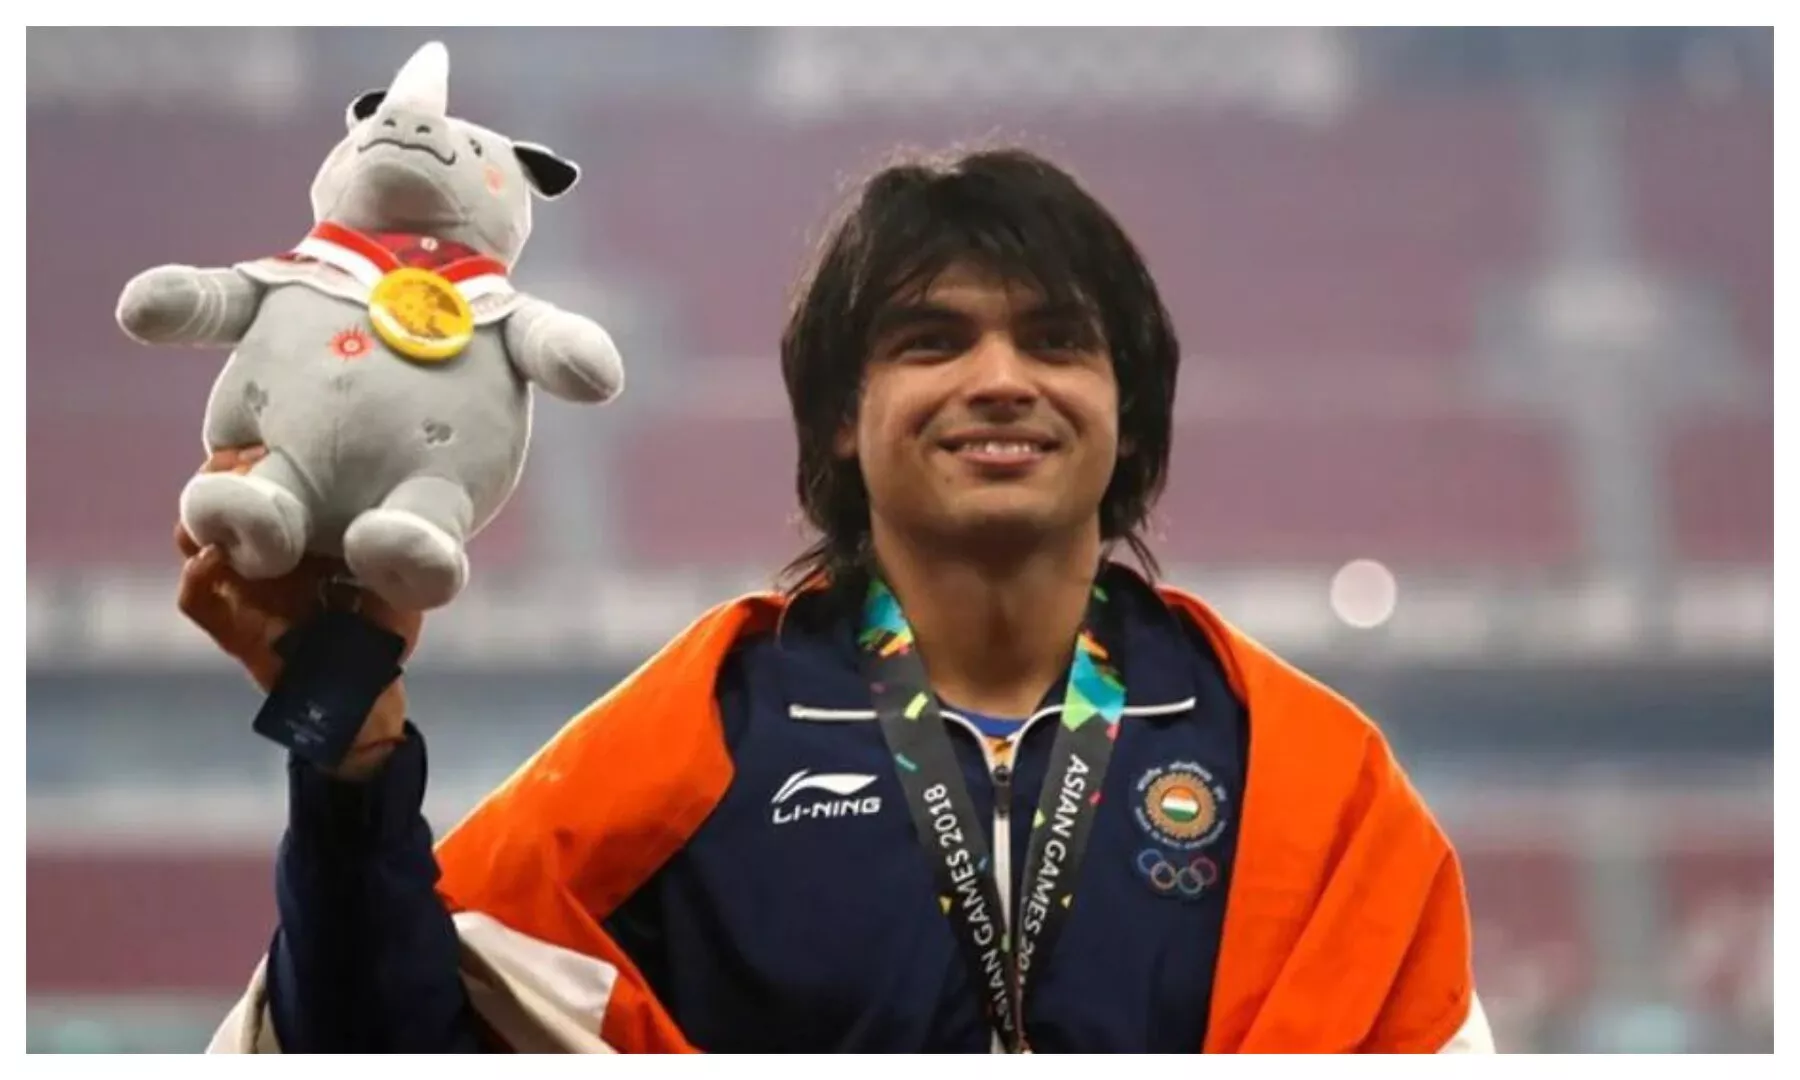 Looking back at Neeraj Chopra's gold medal win in Asian Games 2018